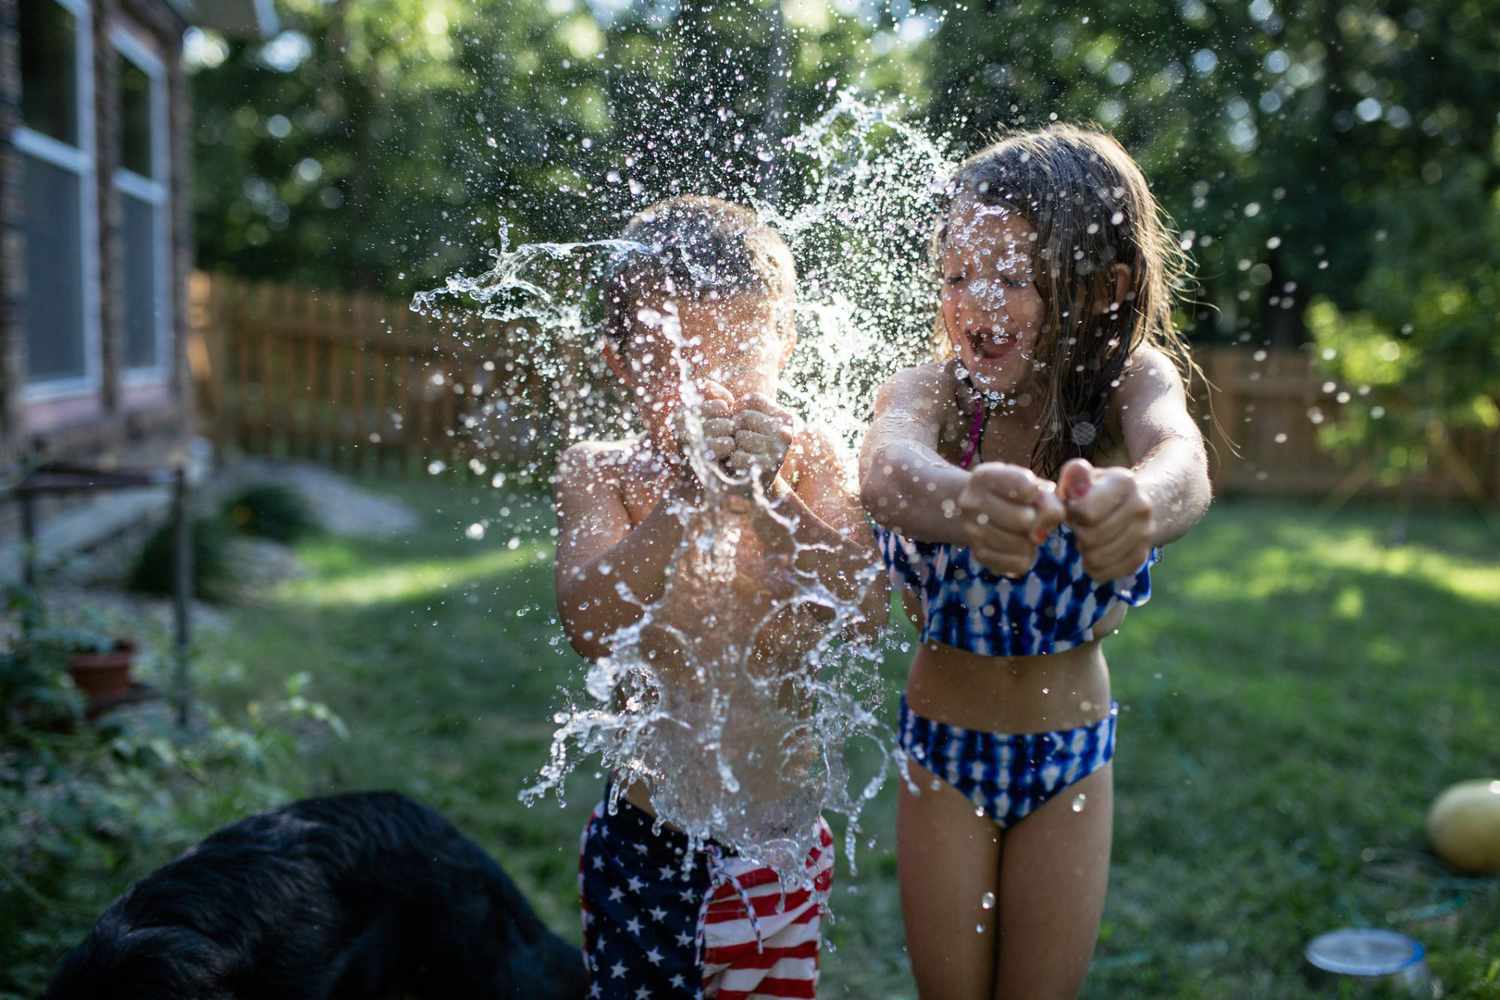 An image of siblings bursting water balloons in a backyard.